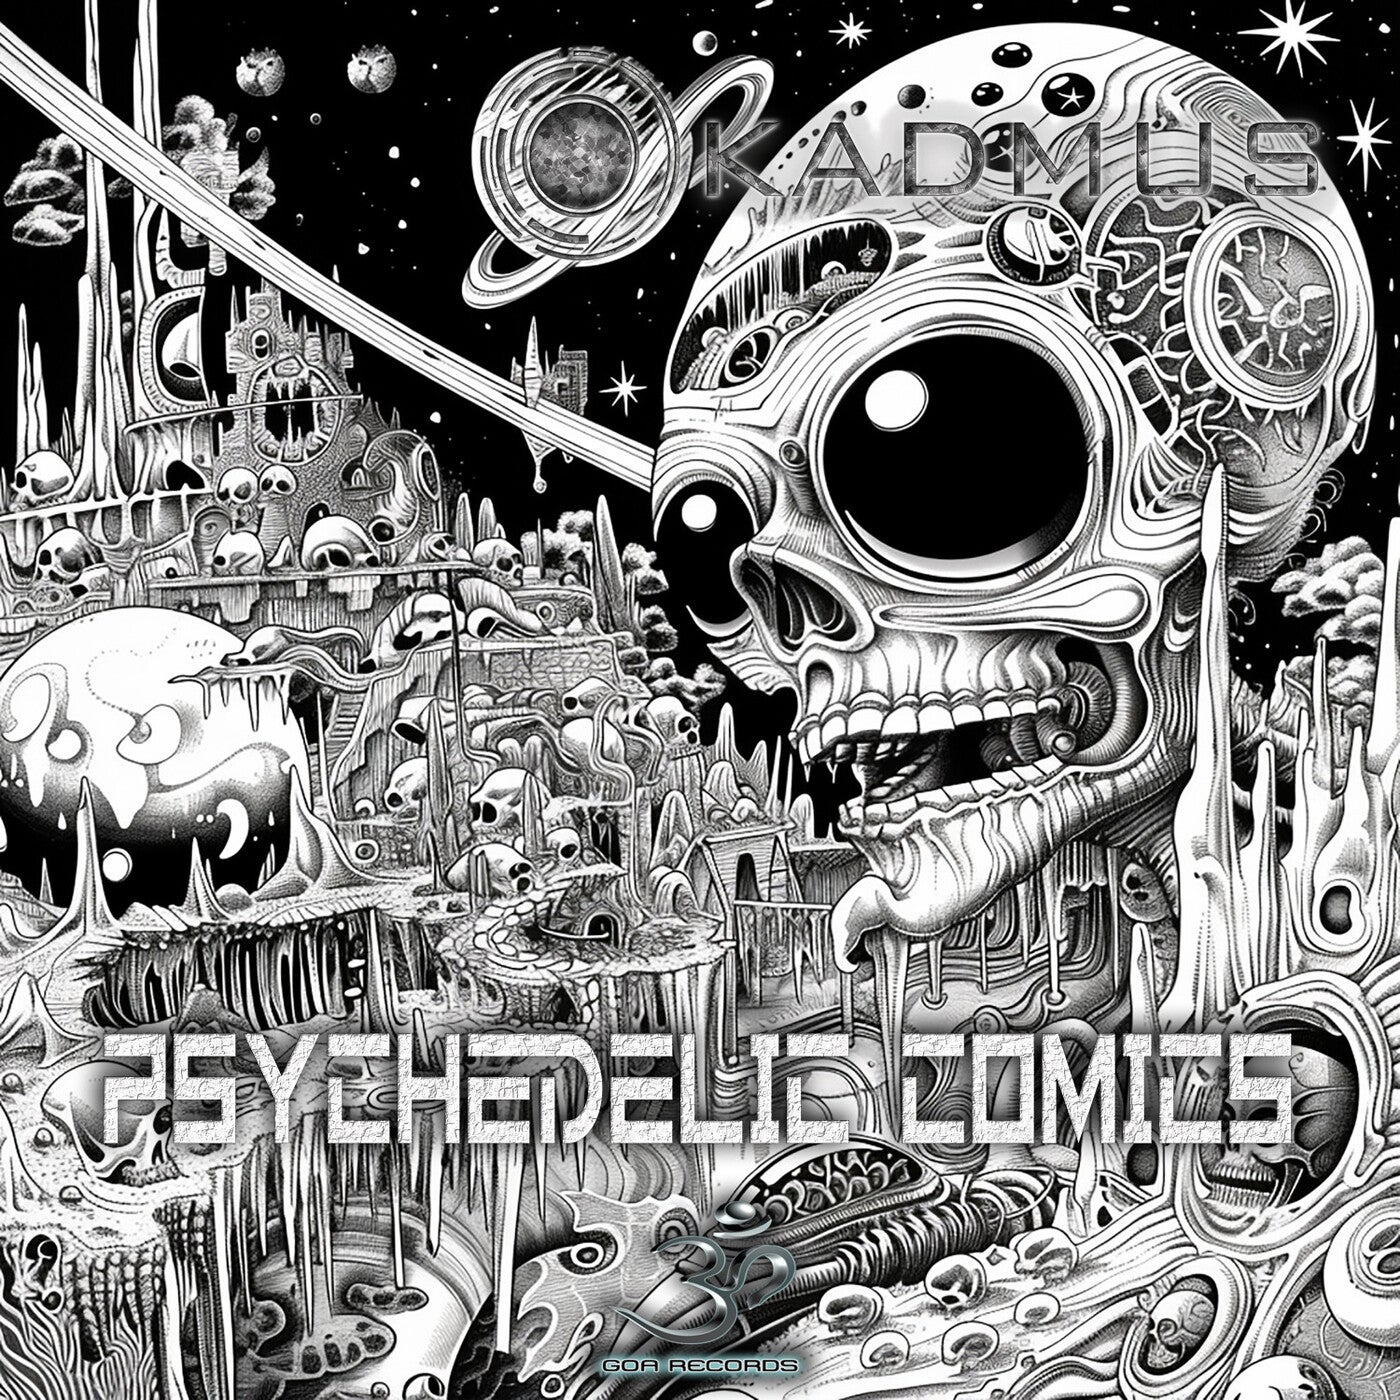 Psychedelic Comics